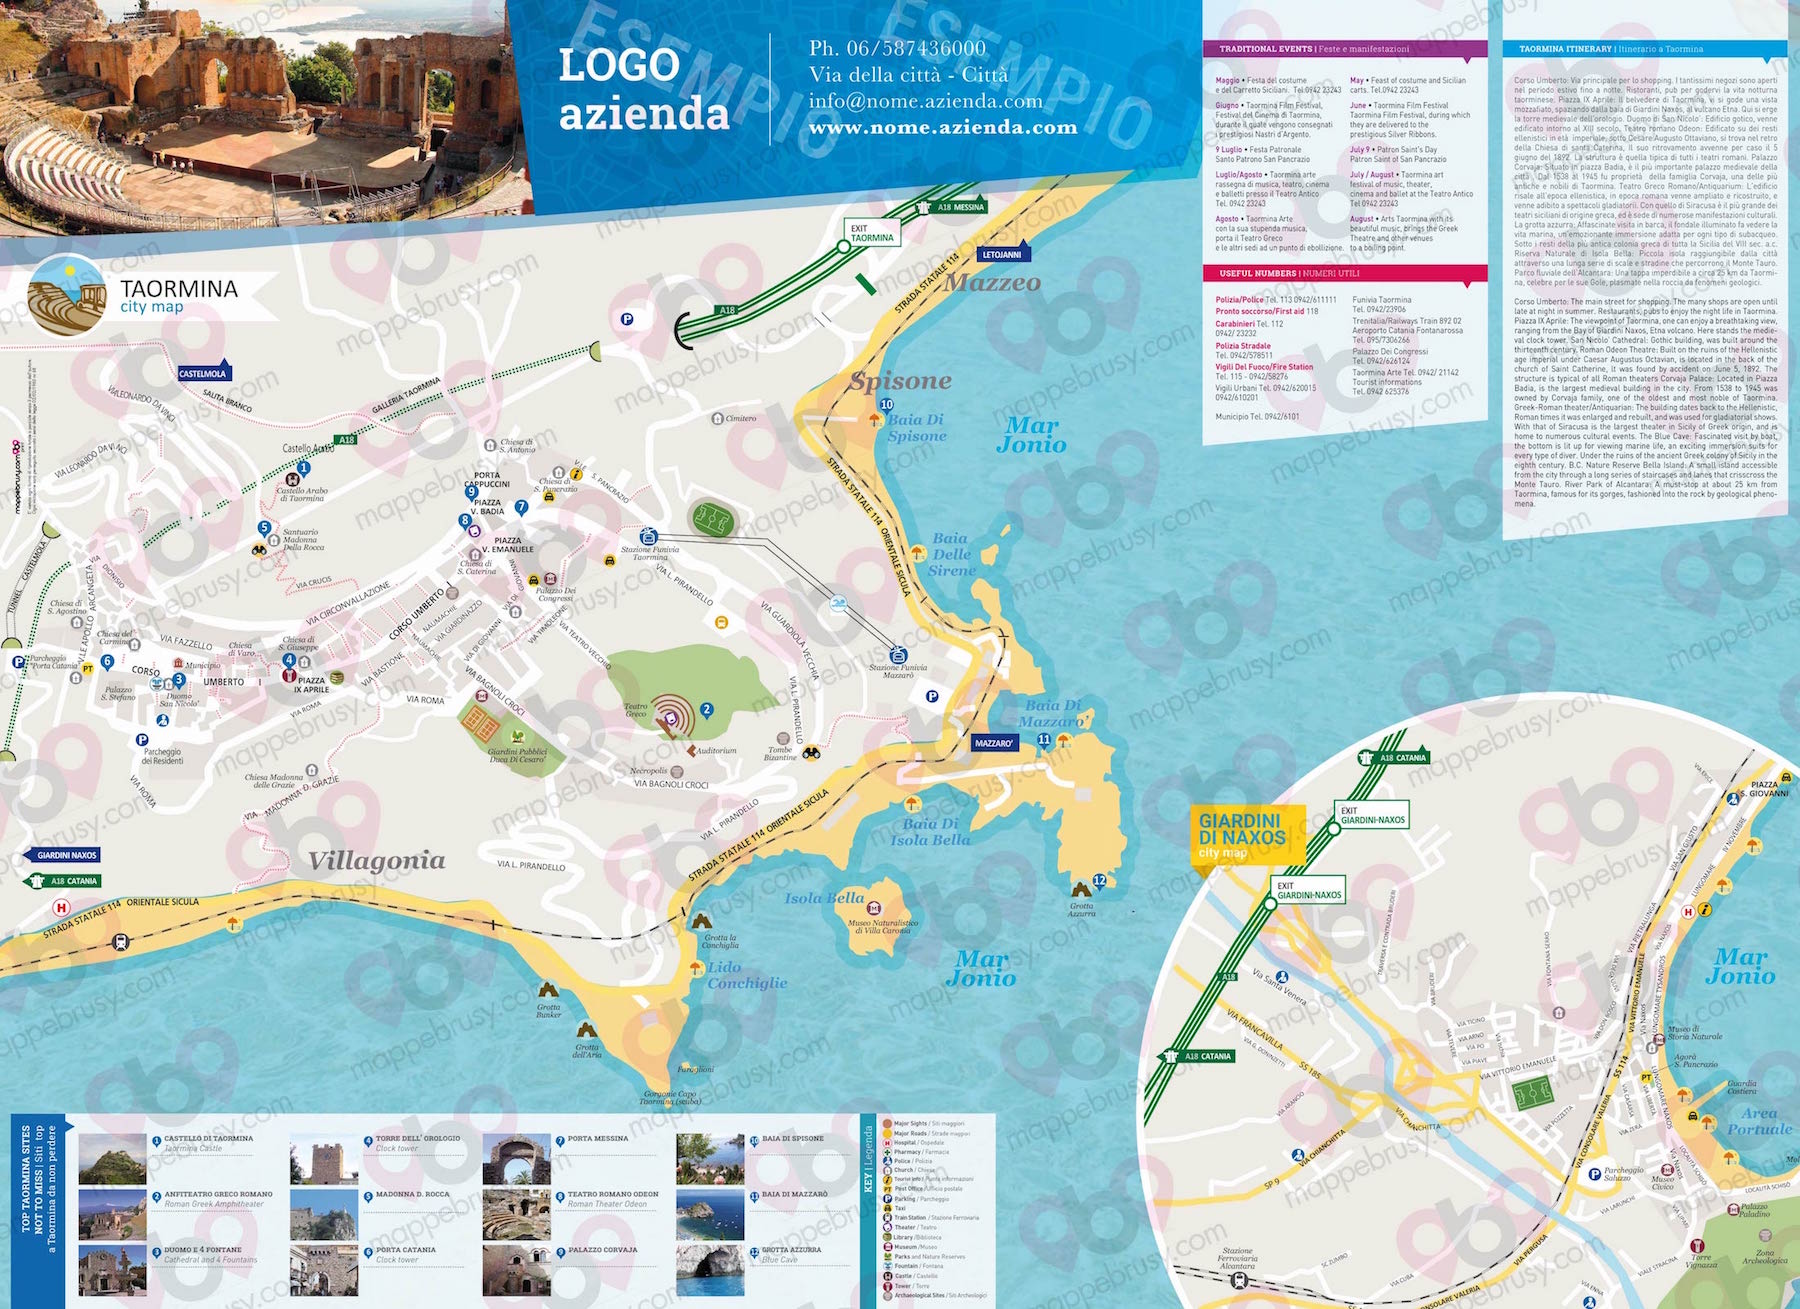 Mappa di Taormina - Taormina city map - mappa Taormina - mappa personalizzata di Taormina - mappa tursitica di Taormina